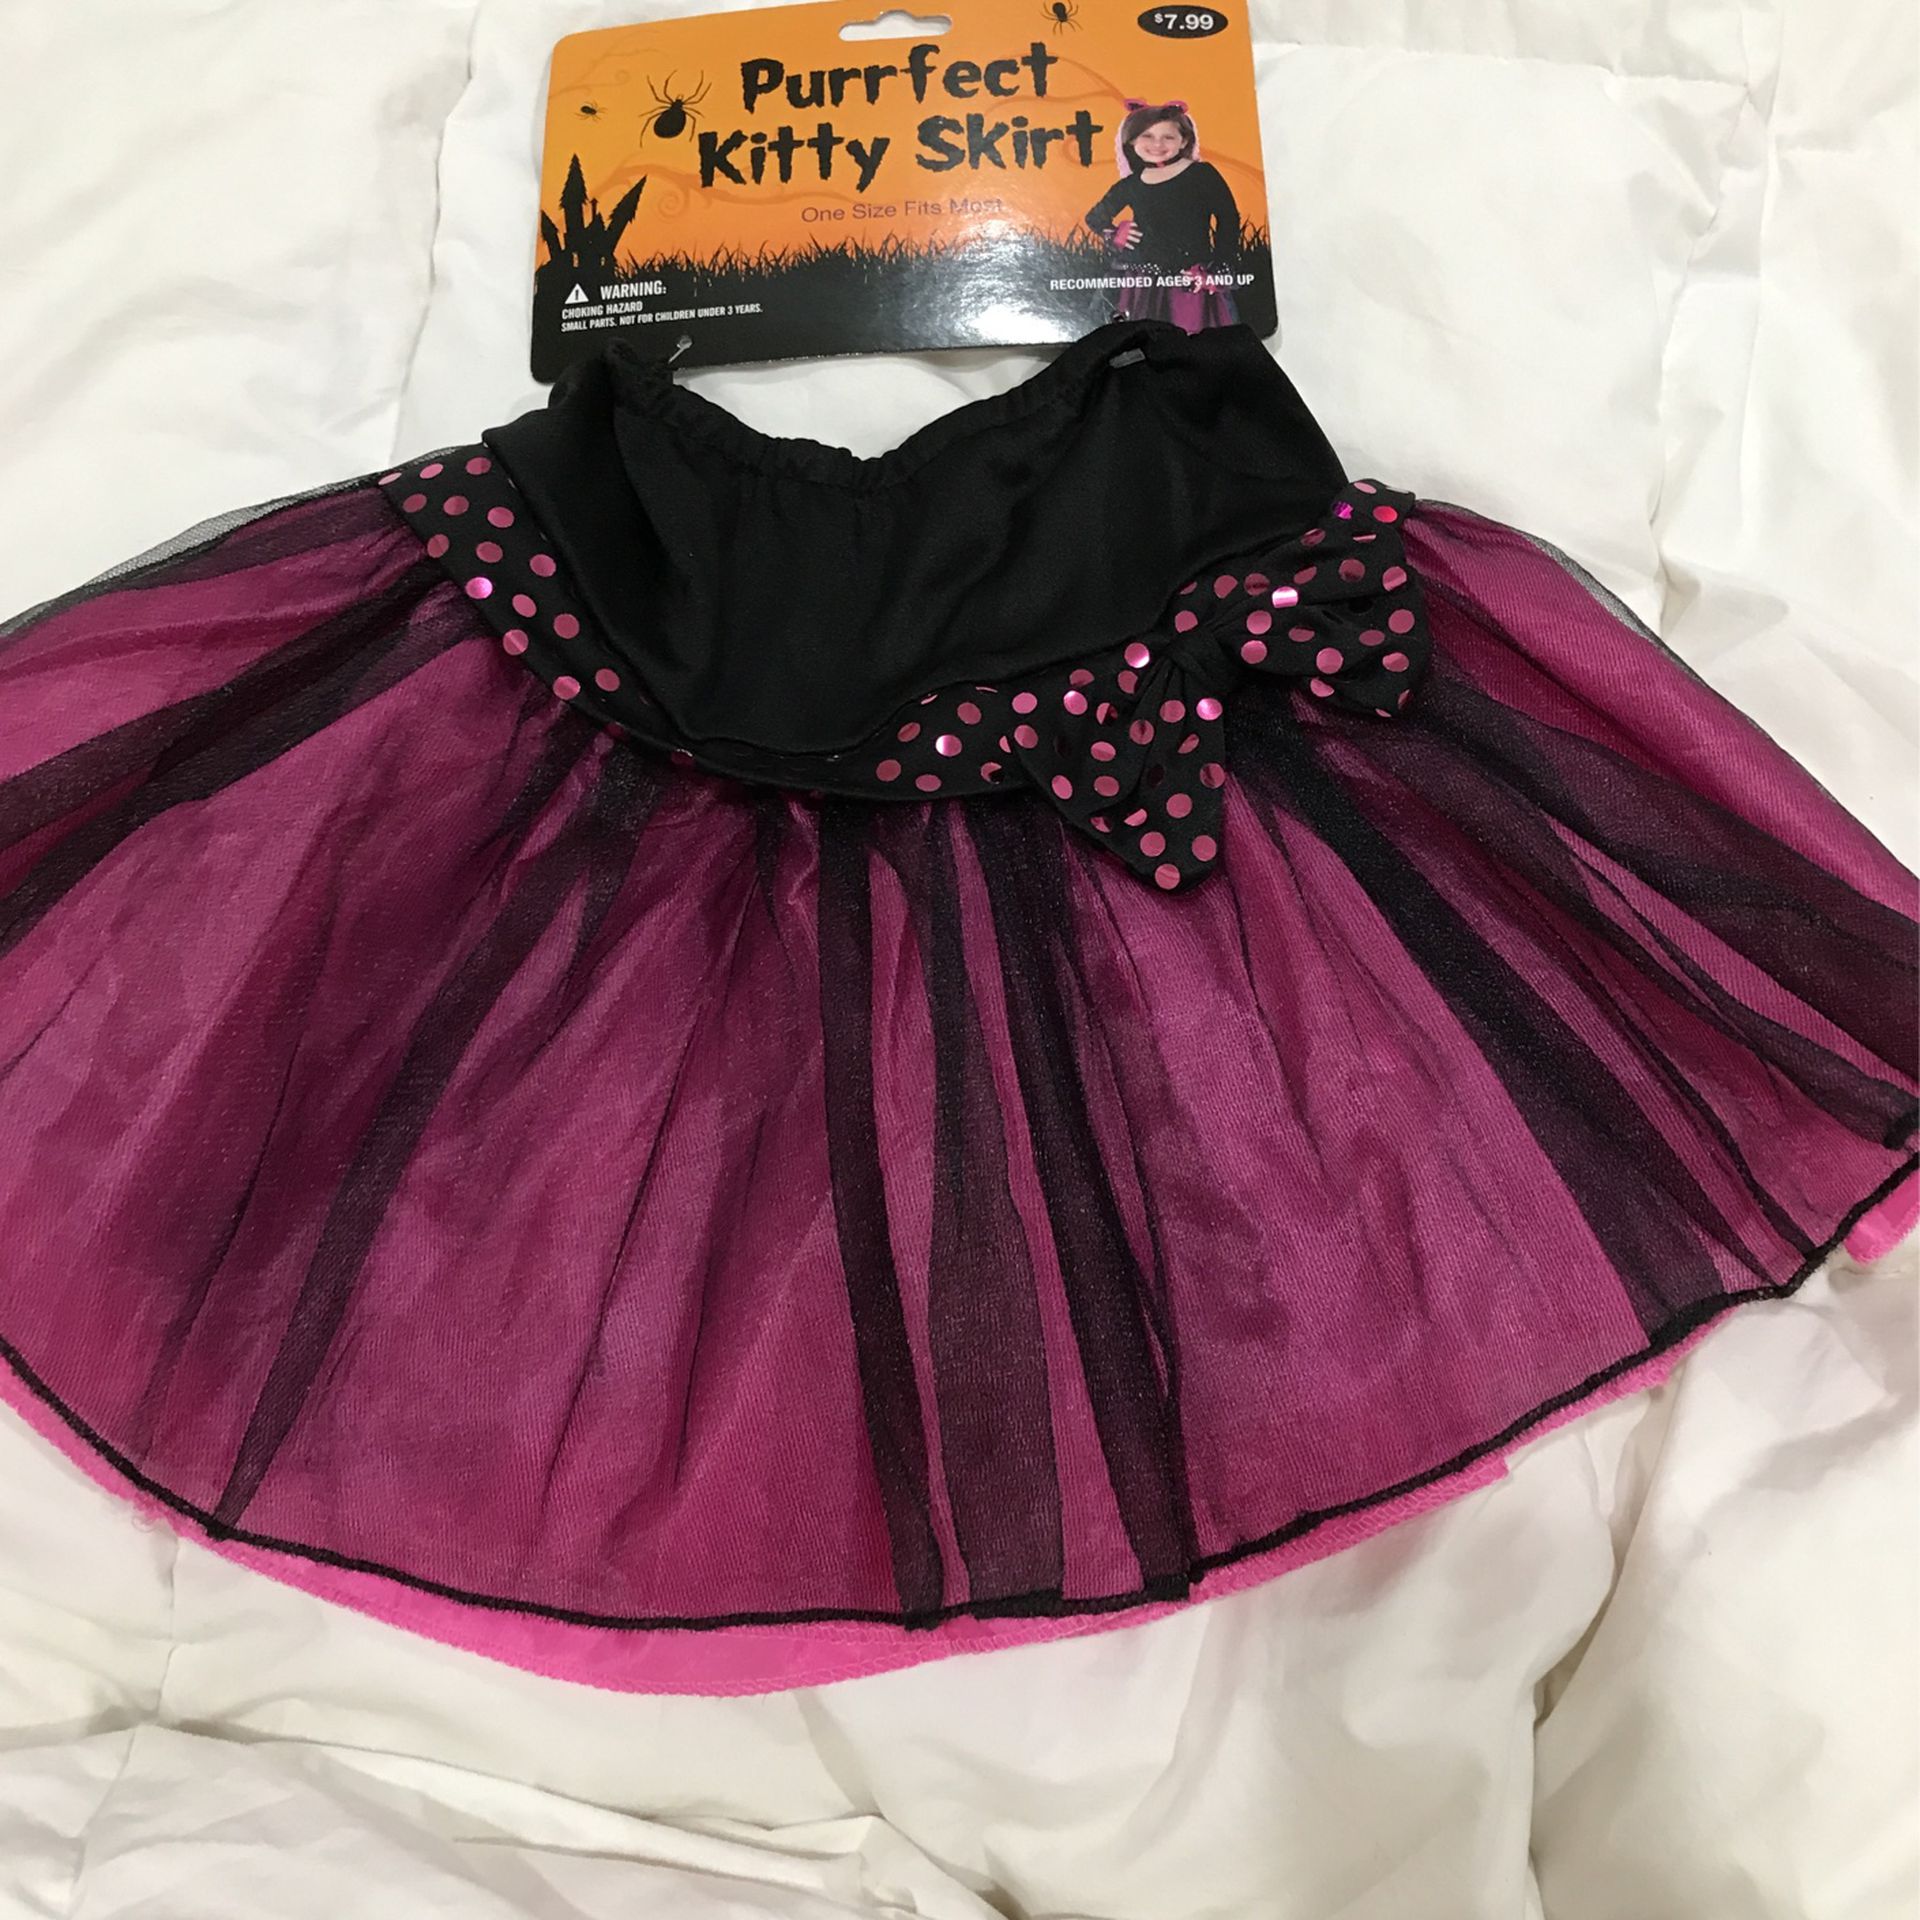 Purrfect Kitty Skirt Child Size